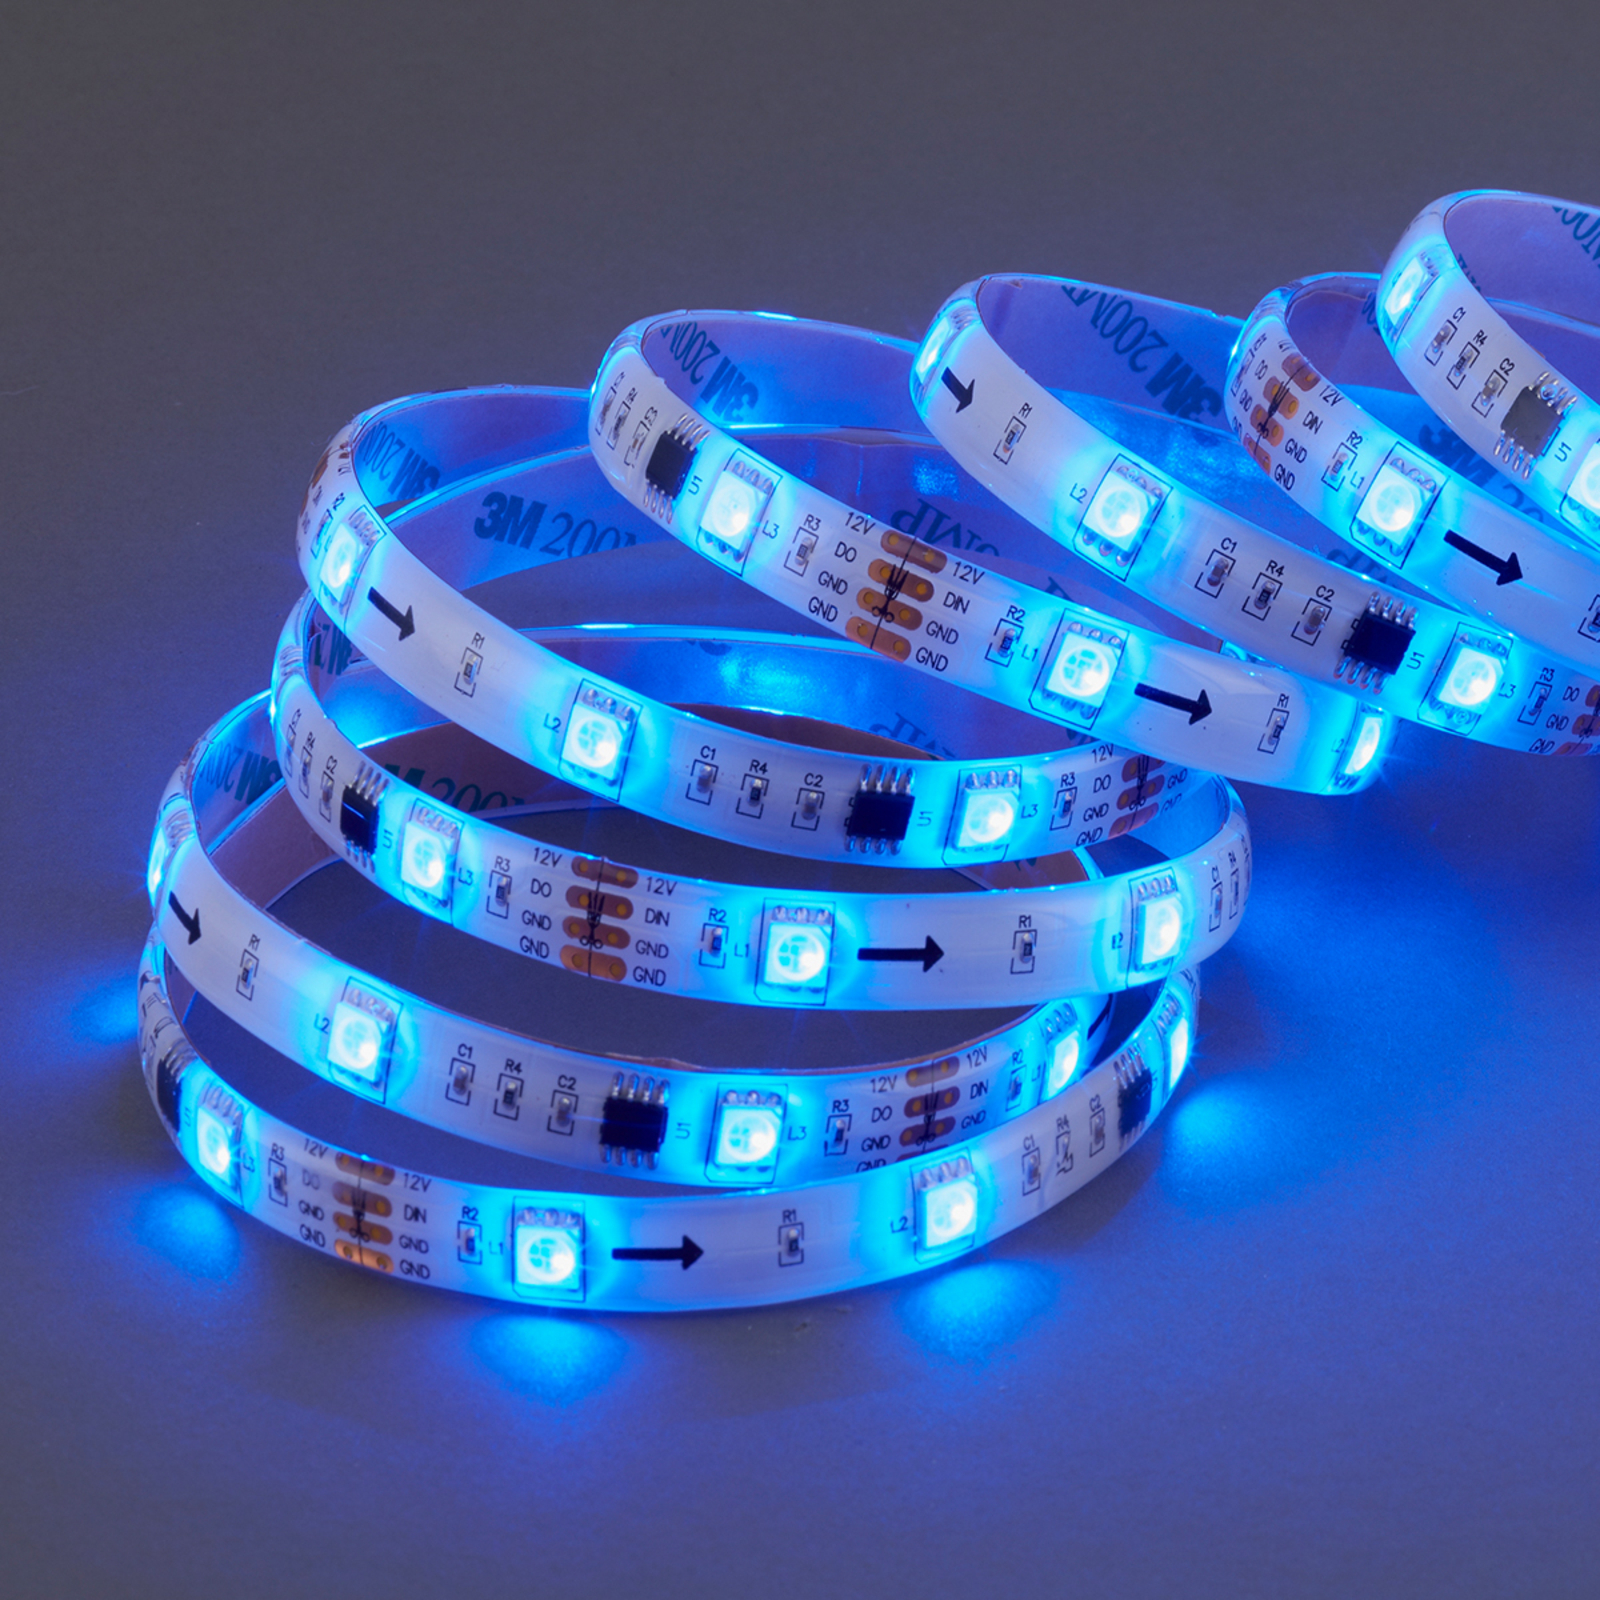 164 svetelných funkcií – 500 cm RGB-LED pásik Mo